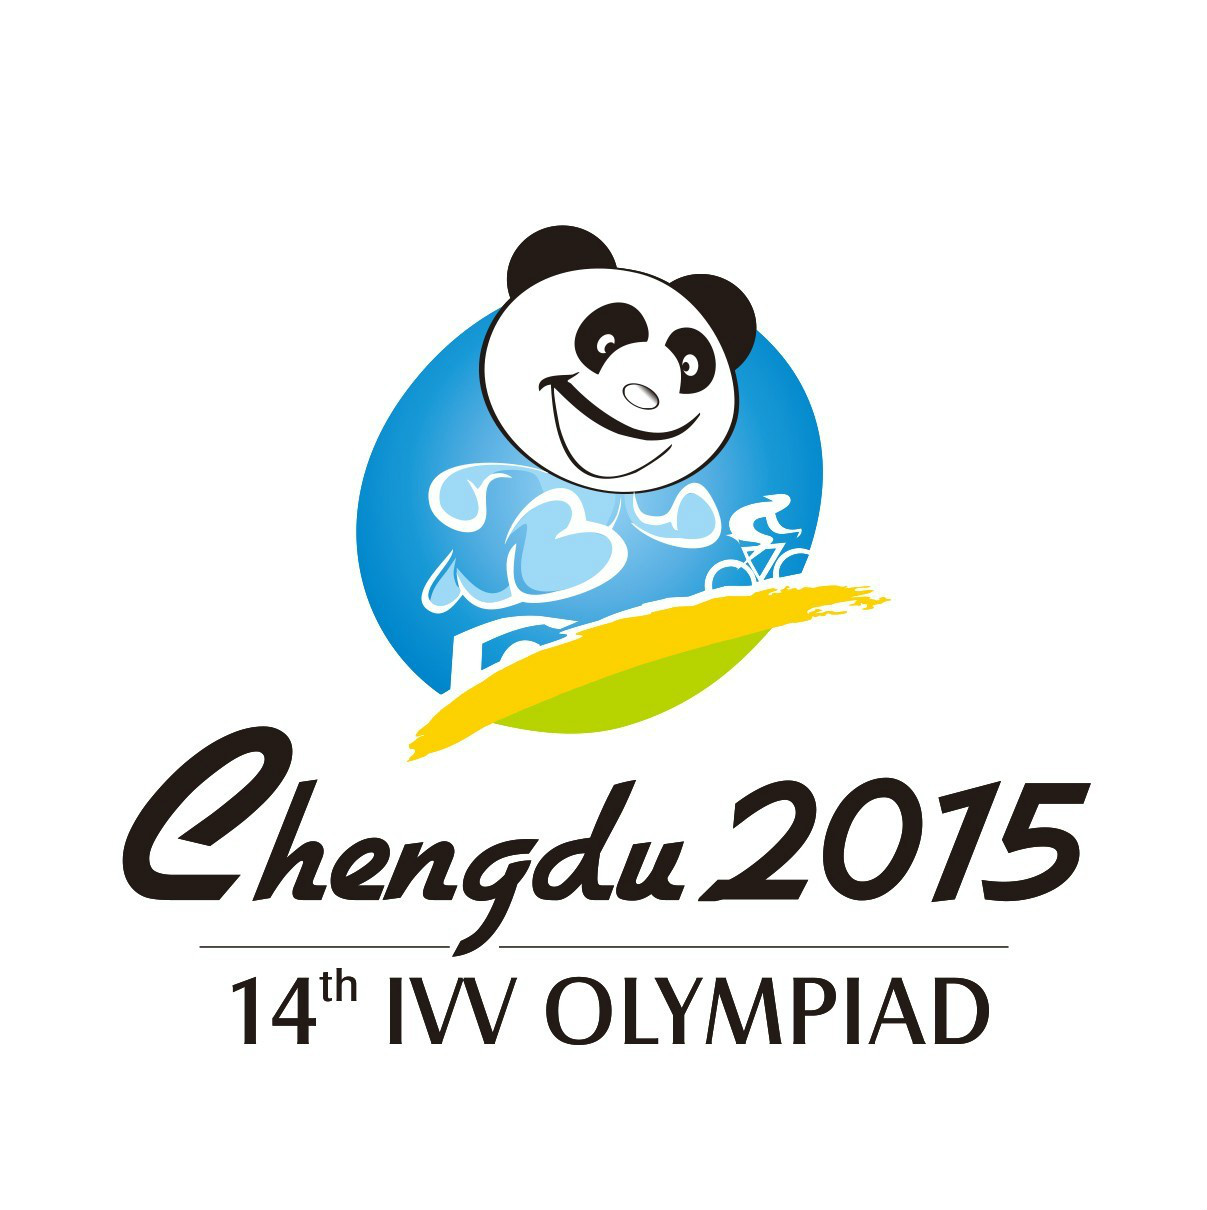 2015年成都IVV奧林匹克運動會